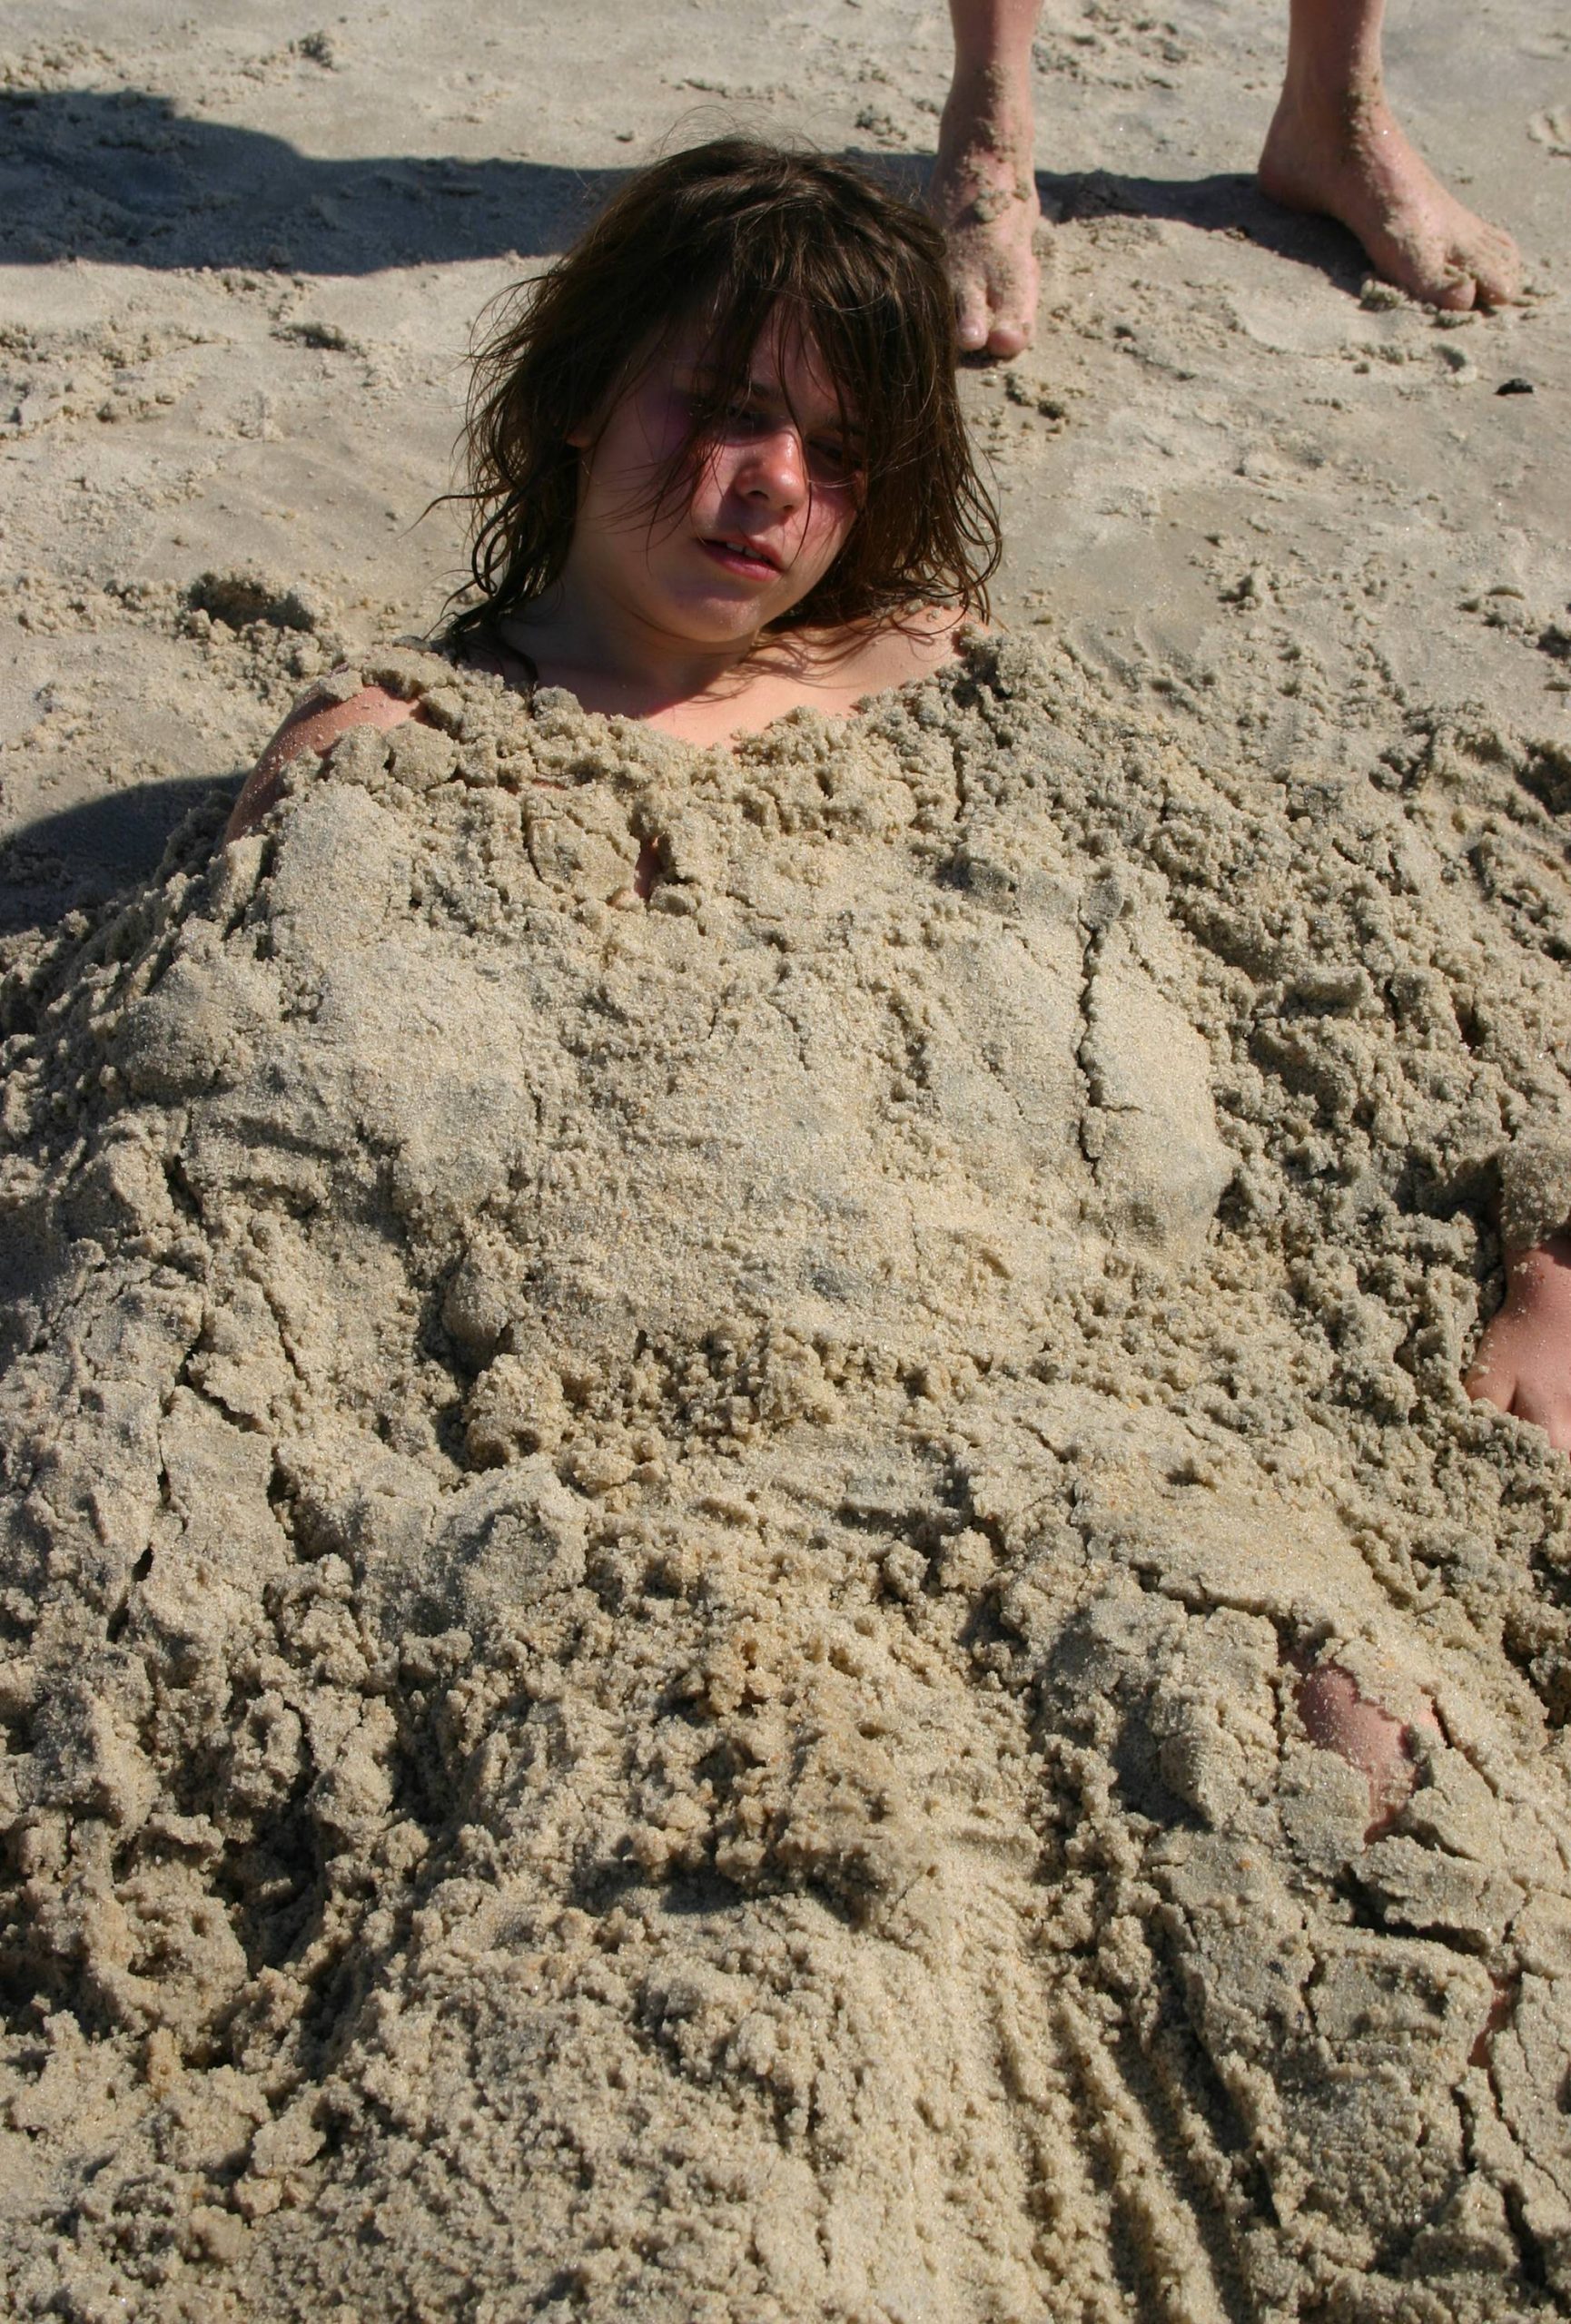 Brazilian Buried in Sands - 2